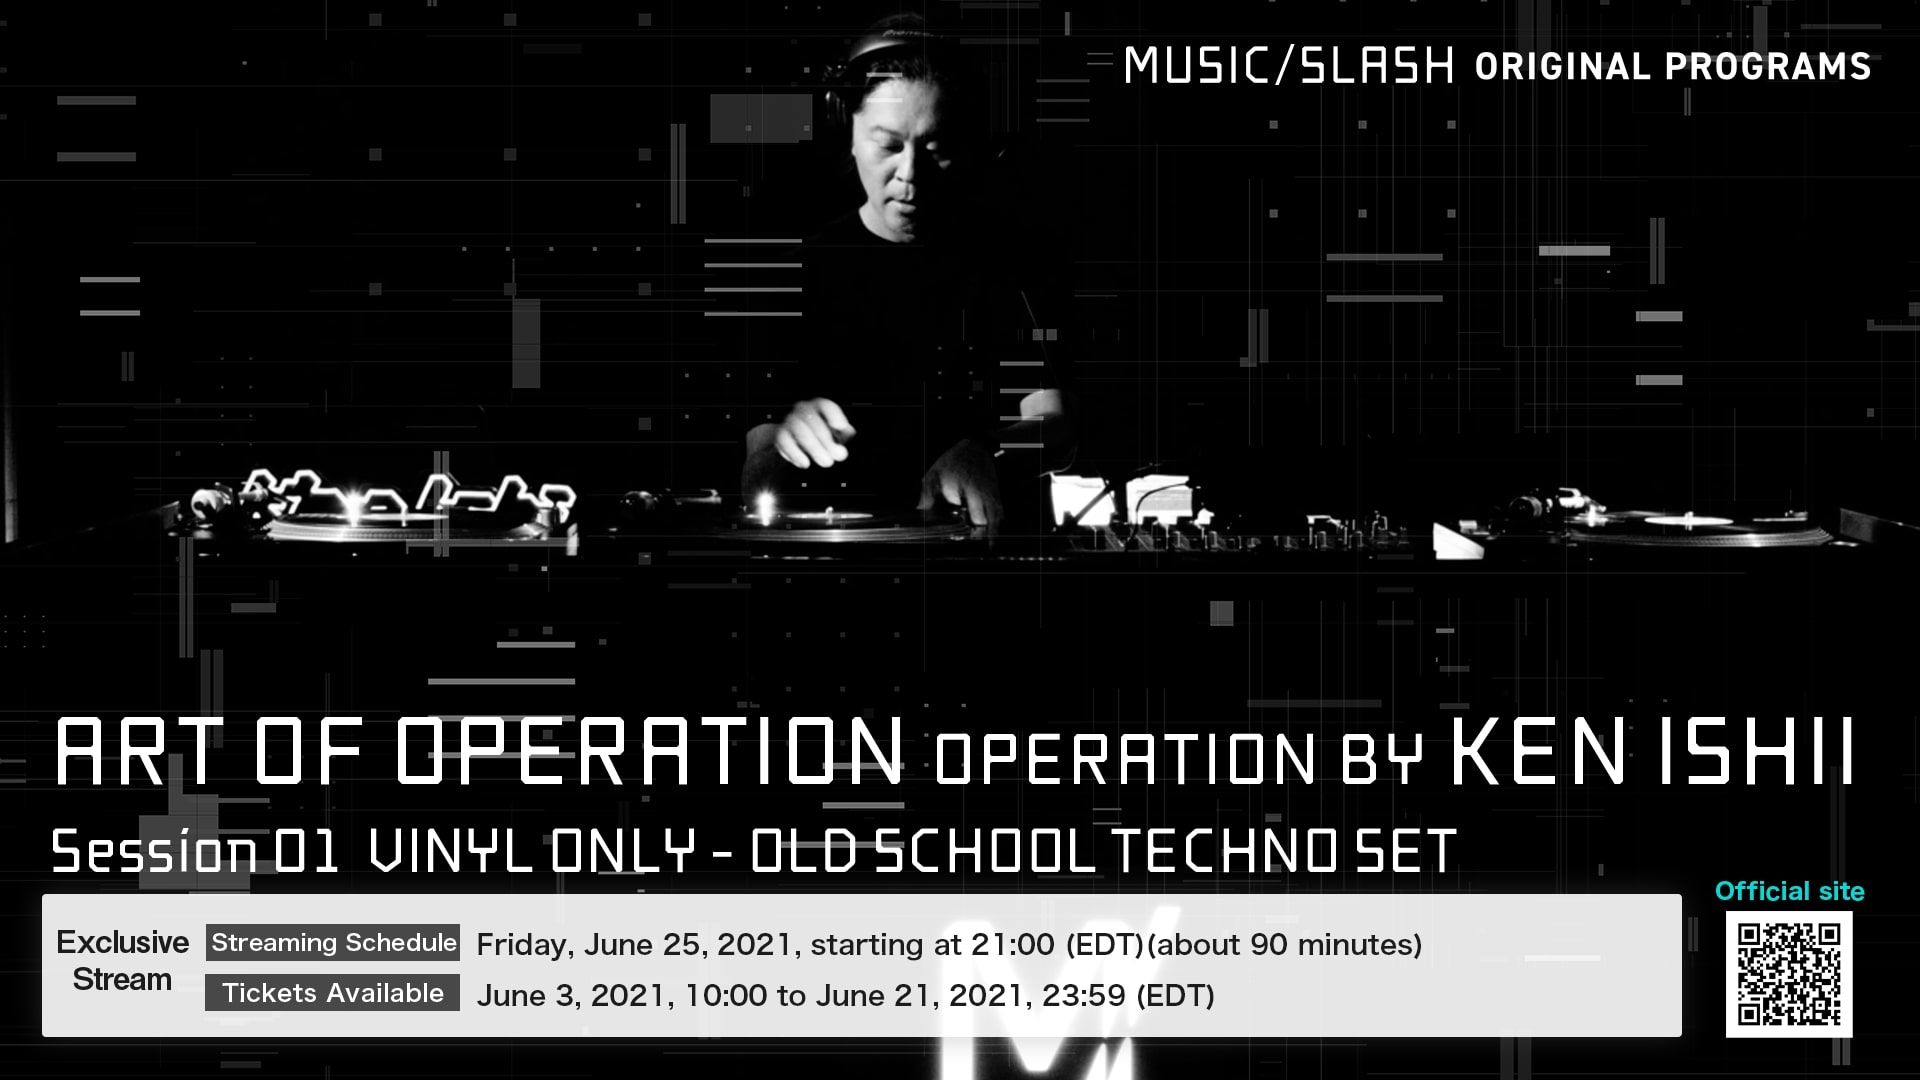 [MUSIC/SLASH] KEN ISHII / ART OF OPERATION VINYL ONLY - OLD SCHOOL TECHNO SET Session 01